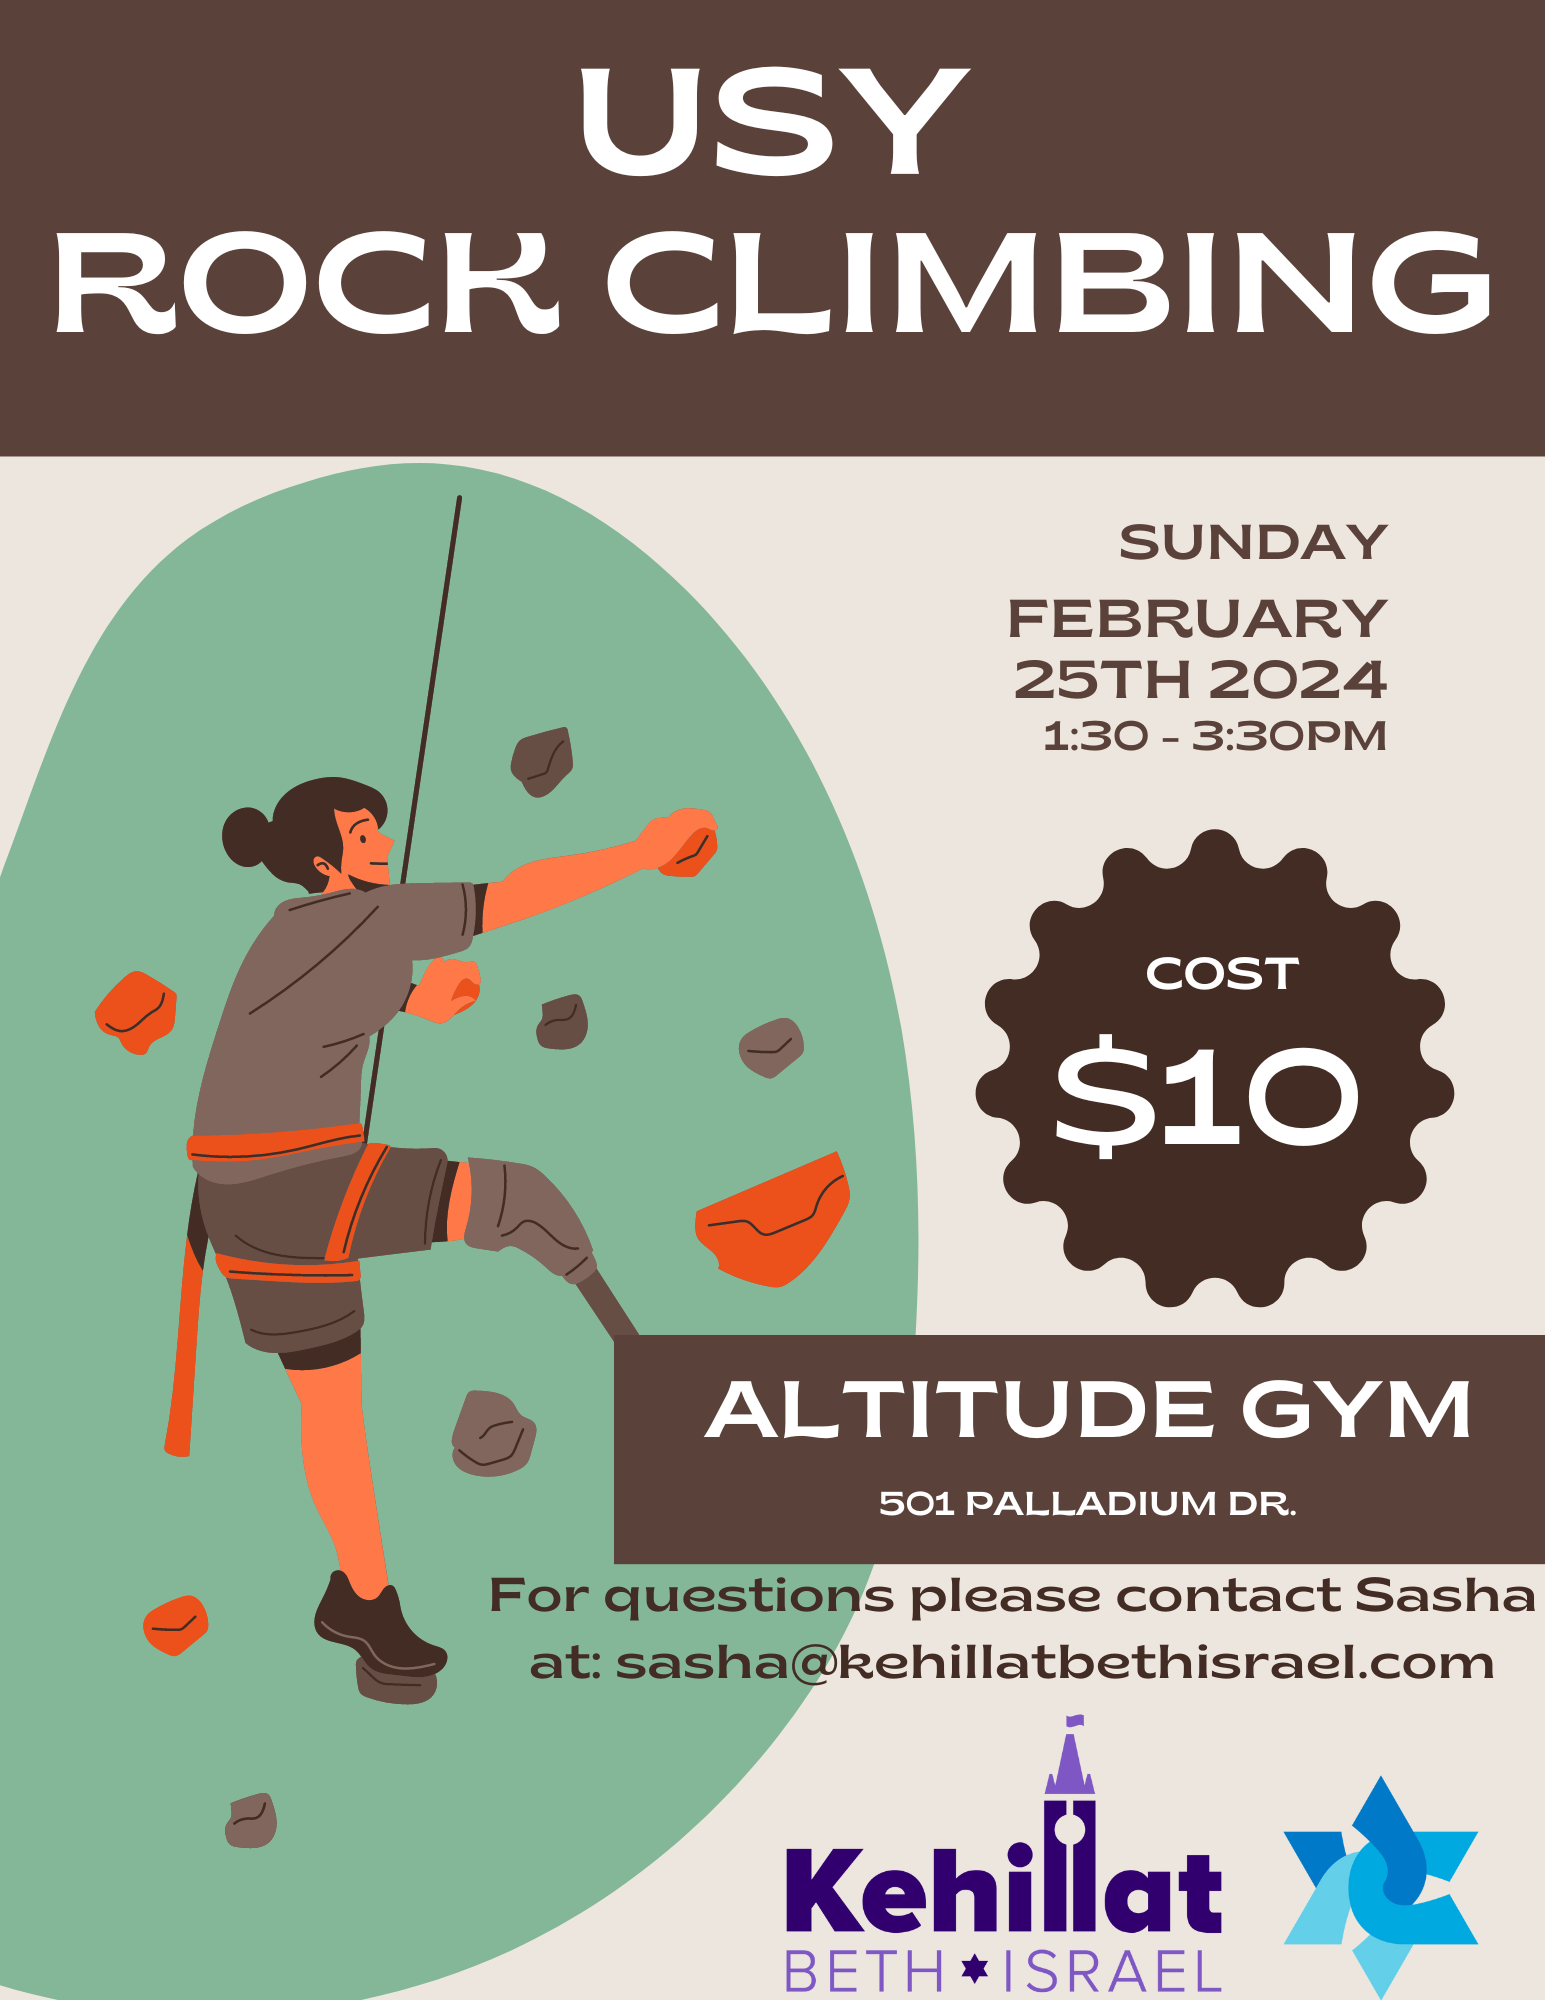 USY Rock Climbing